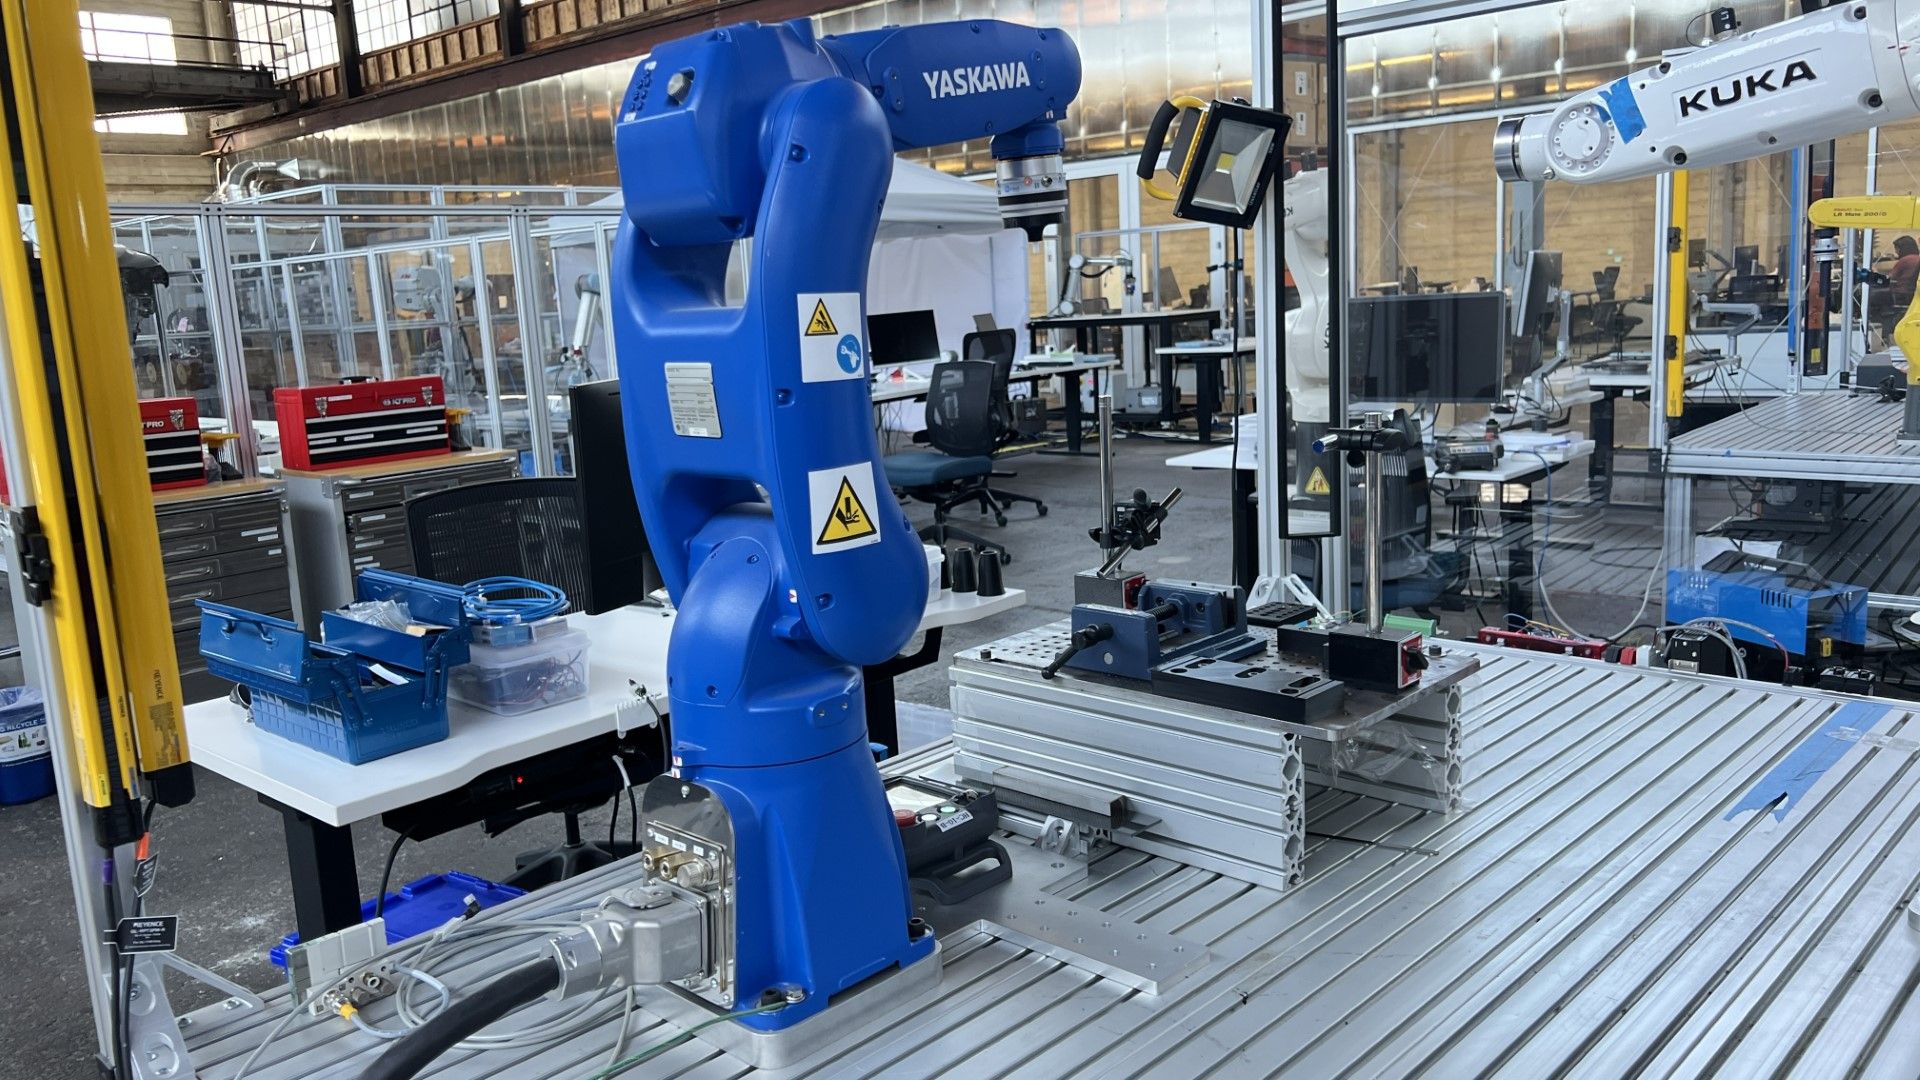 Industrial Motoman Robot - Image 5 of 20